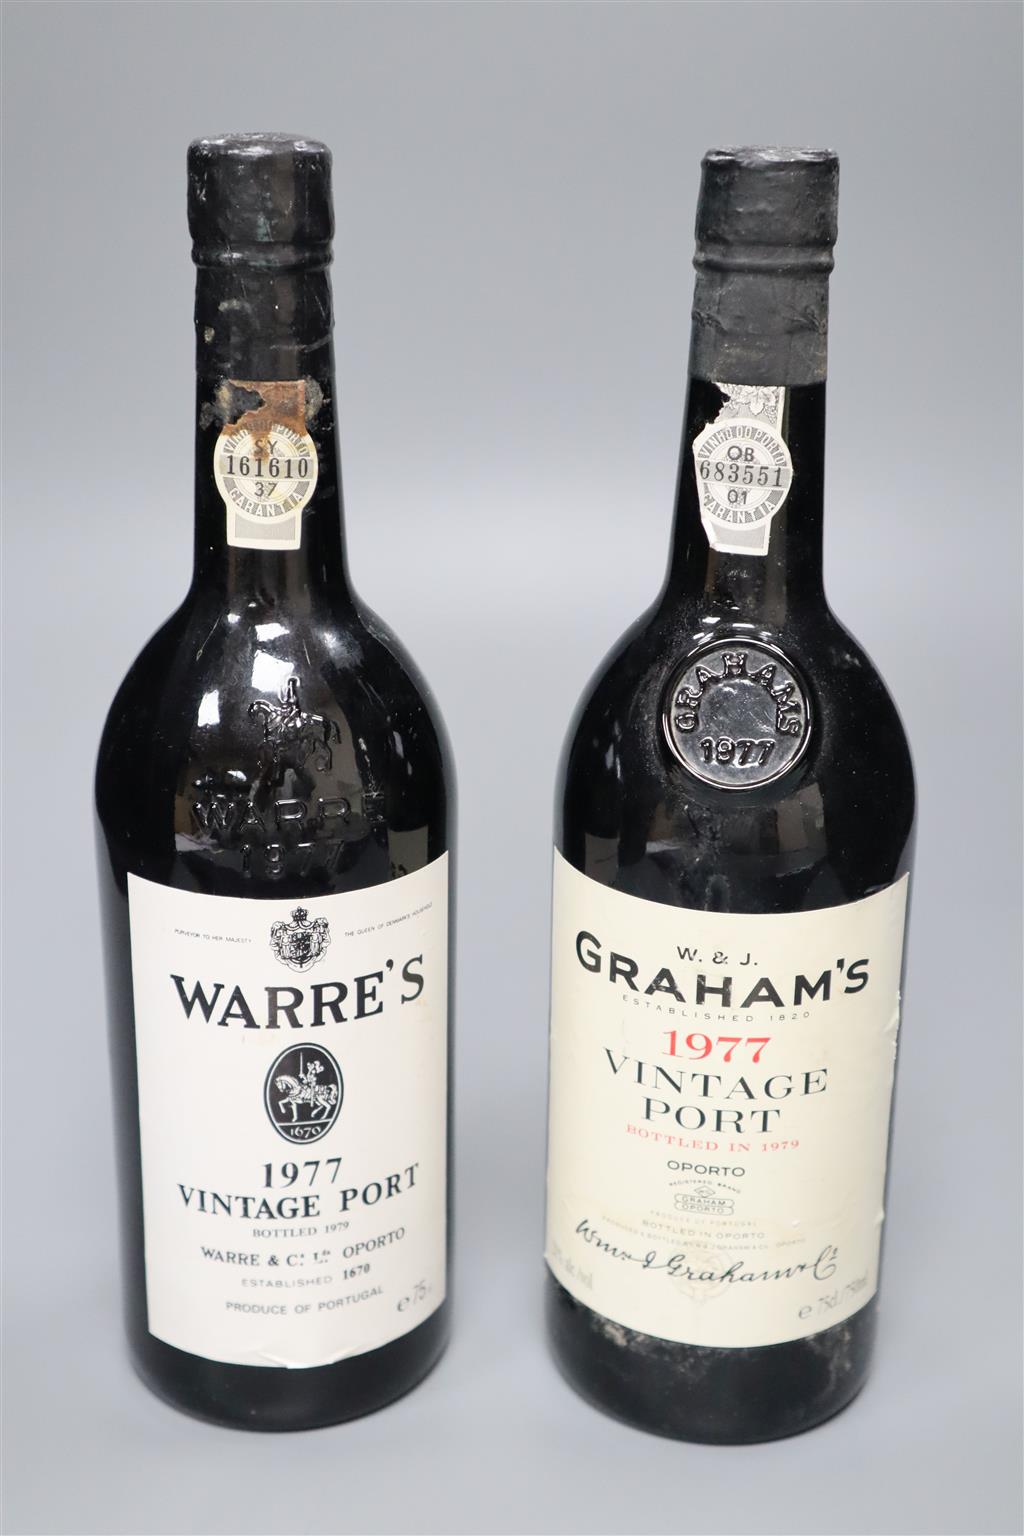 Two bottles of vintage port; Warres 1977 and Grahams 1977